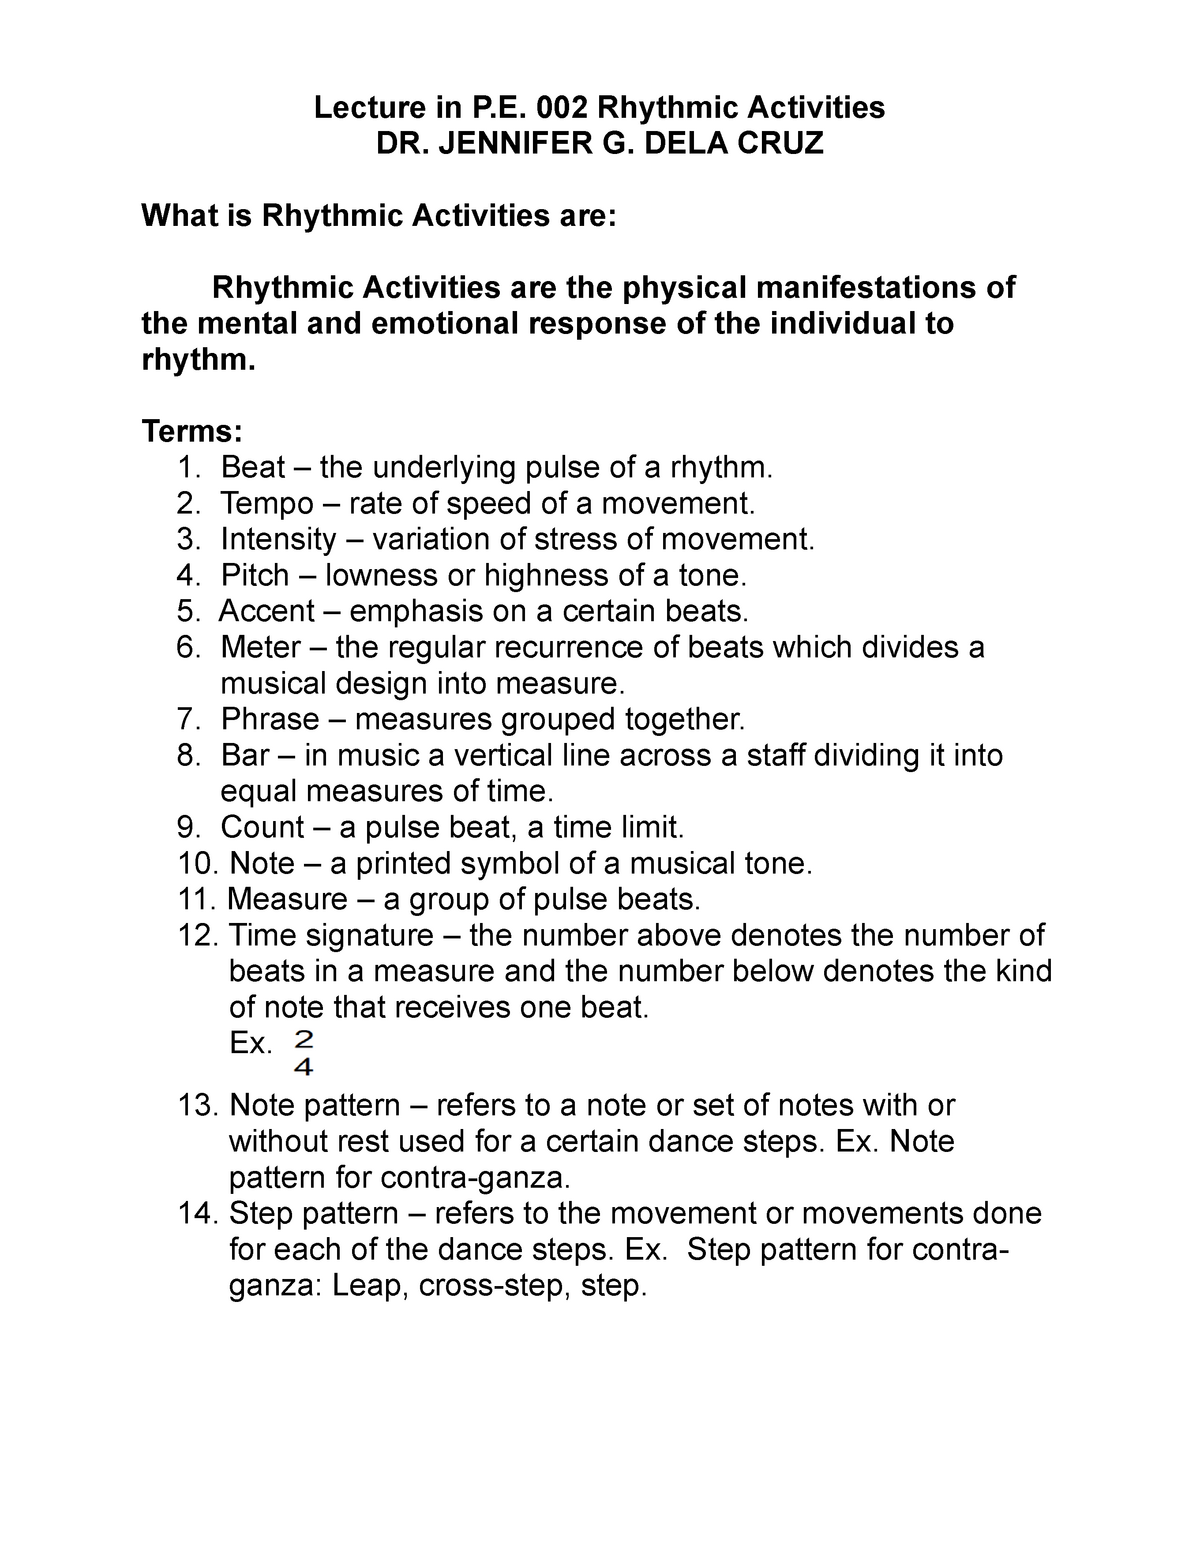 fundamentals of rhythmic activities